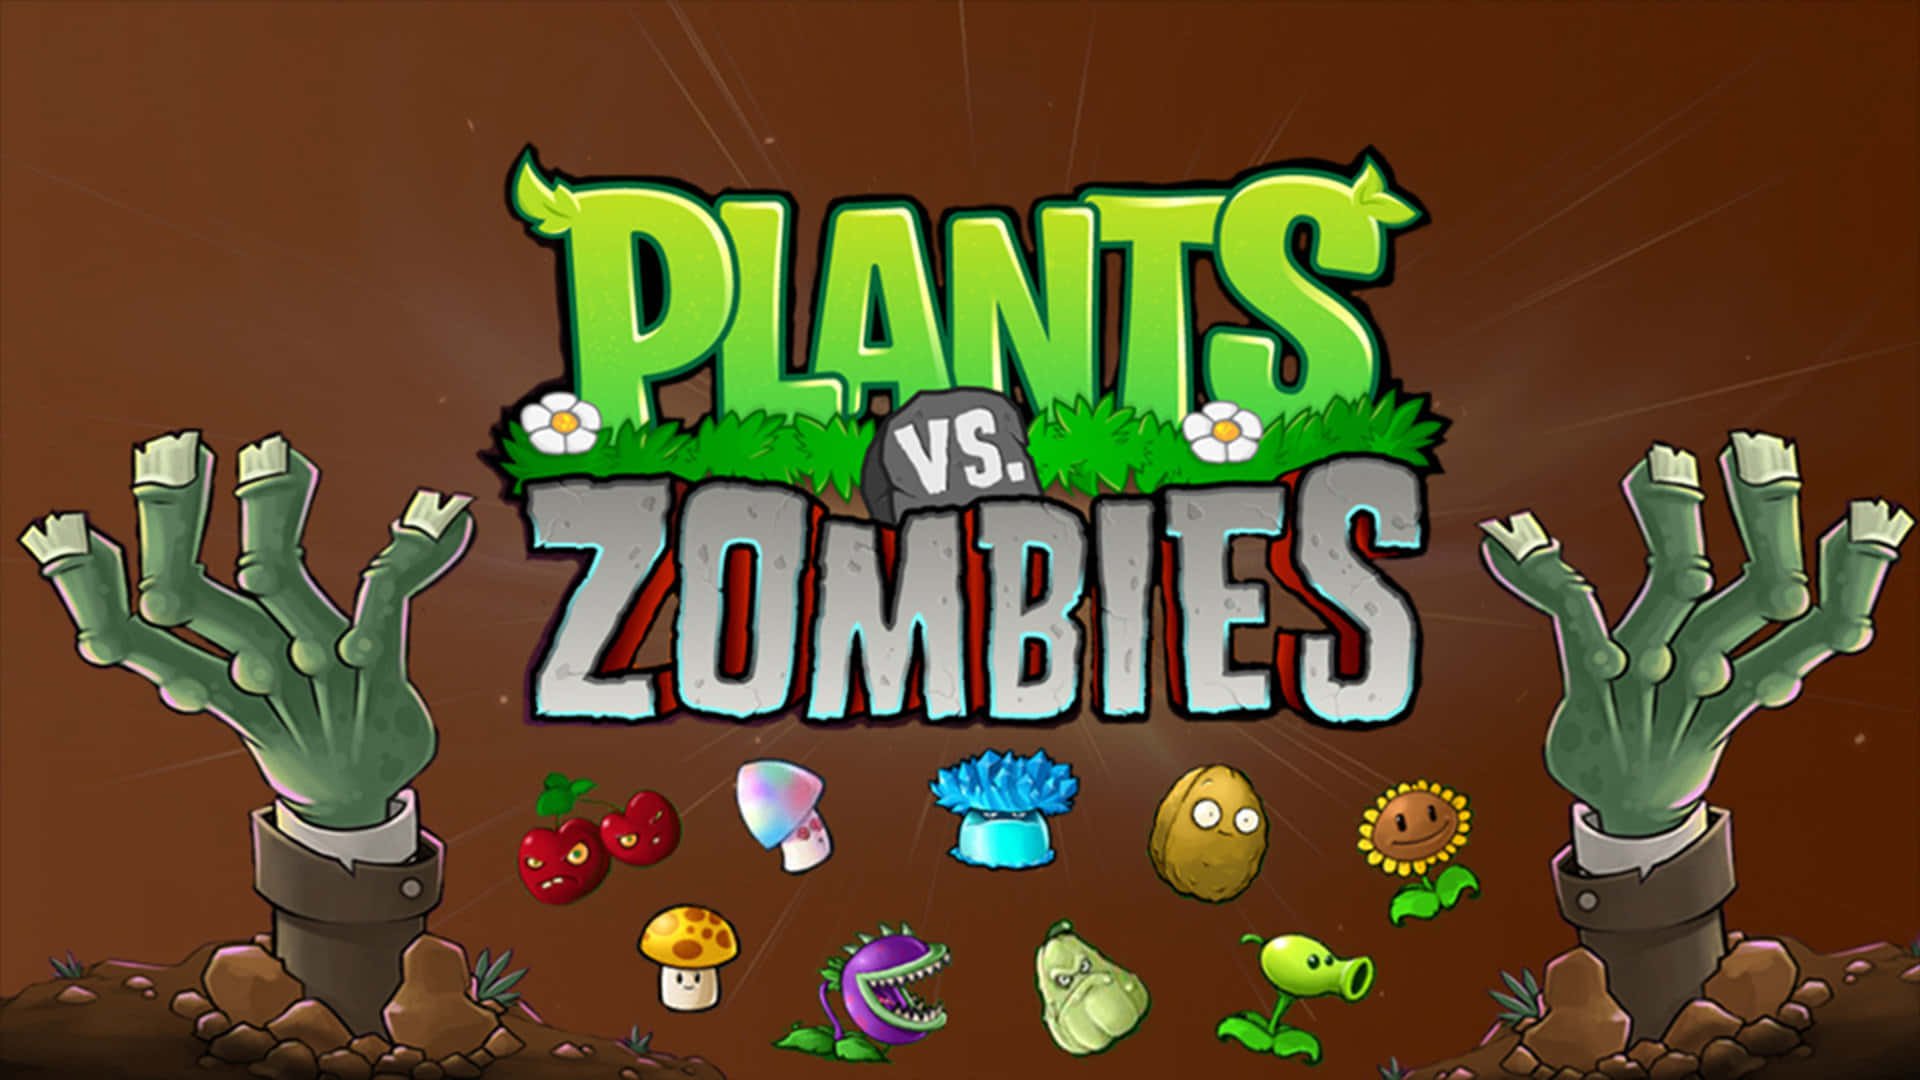 Рождение против зомби. Растения против зомби 1 зомби. Игра Plants vs Zombies 4. Растения из растения против зомби 1. Растение против зомби растения зомби.